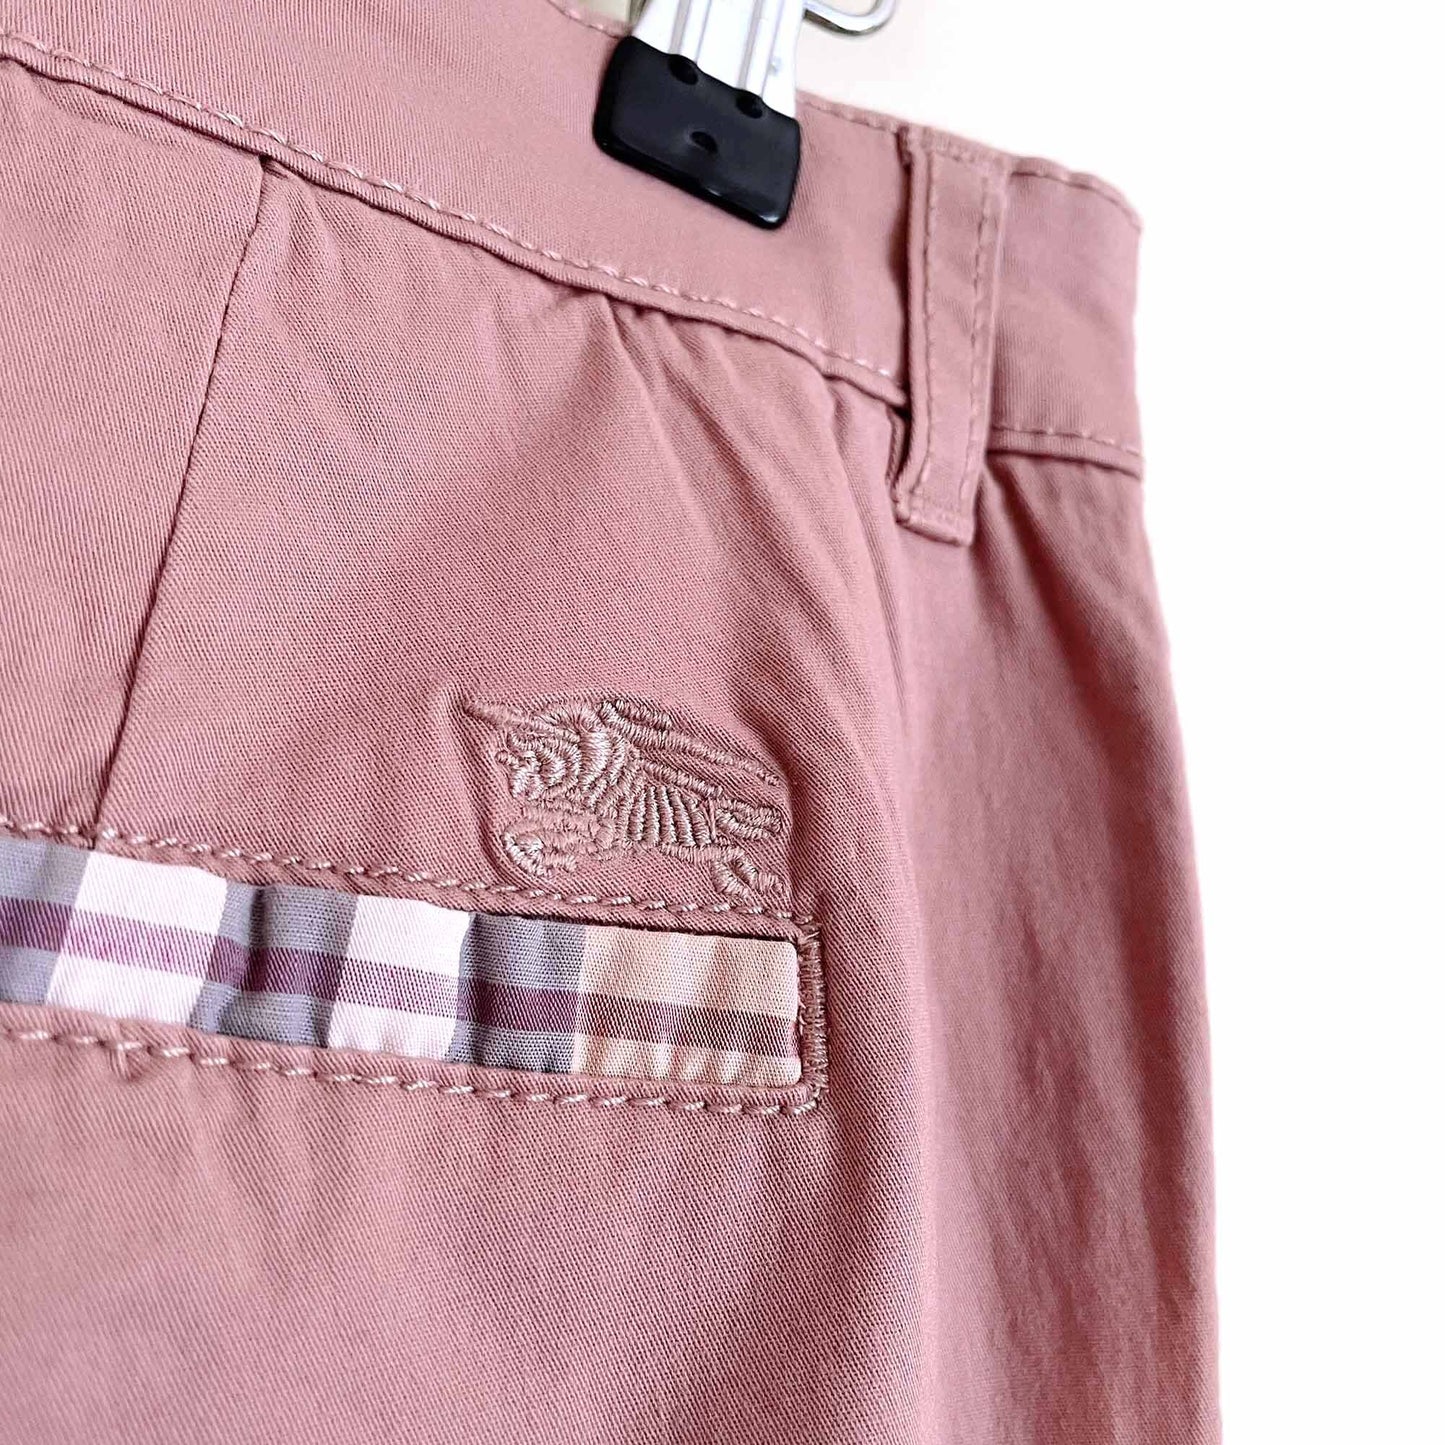 burberry brit pink slim fit chino trouser - size medium